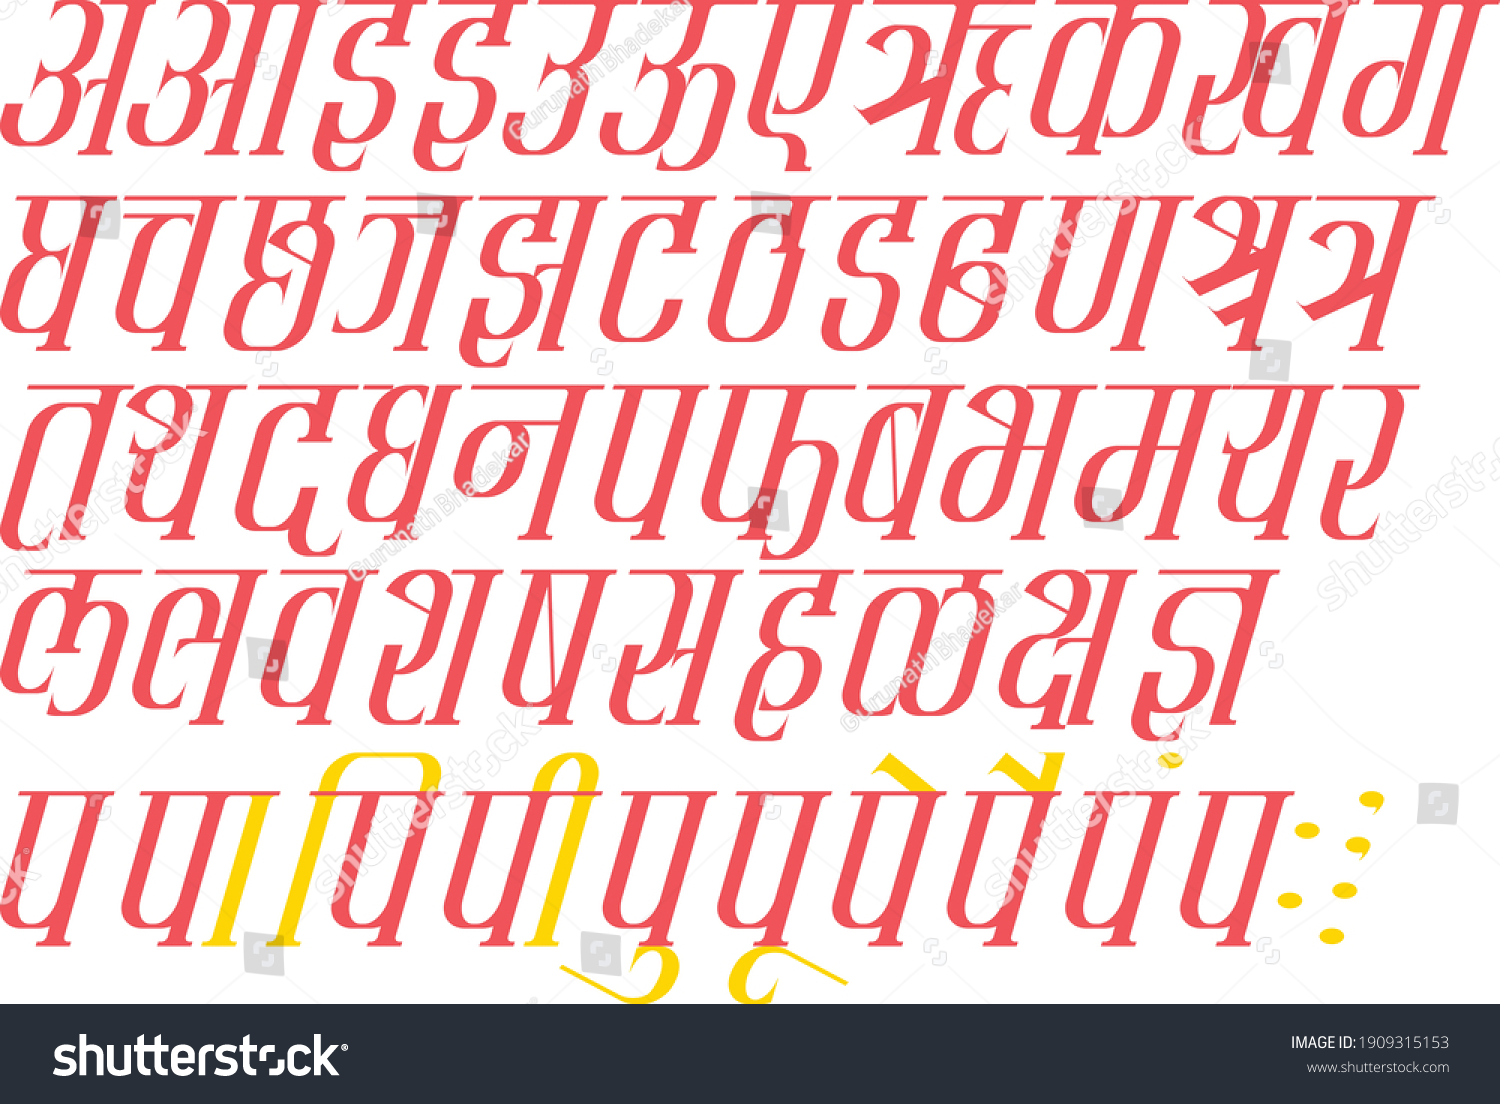 SVG of Handmade Devanagari calligraphic font for Indian languages, all alphabets Hindi, Sanskrit, and Marathi.   svg